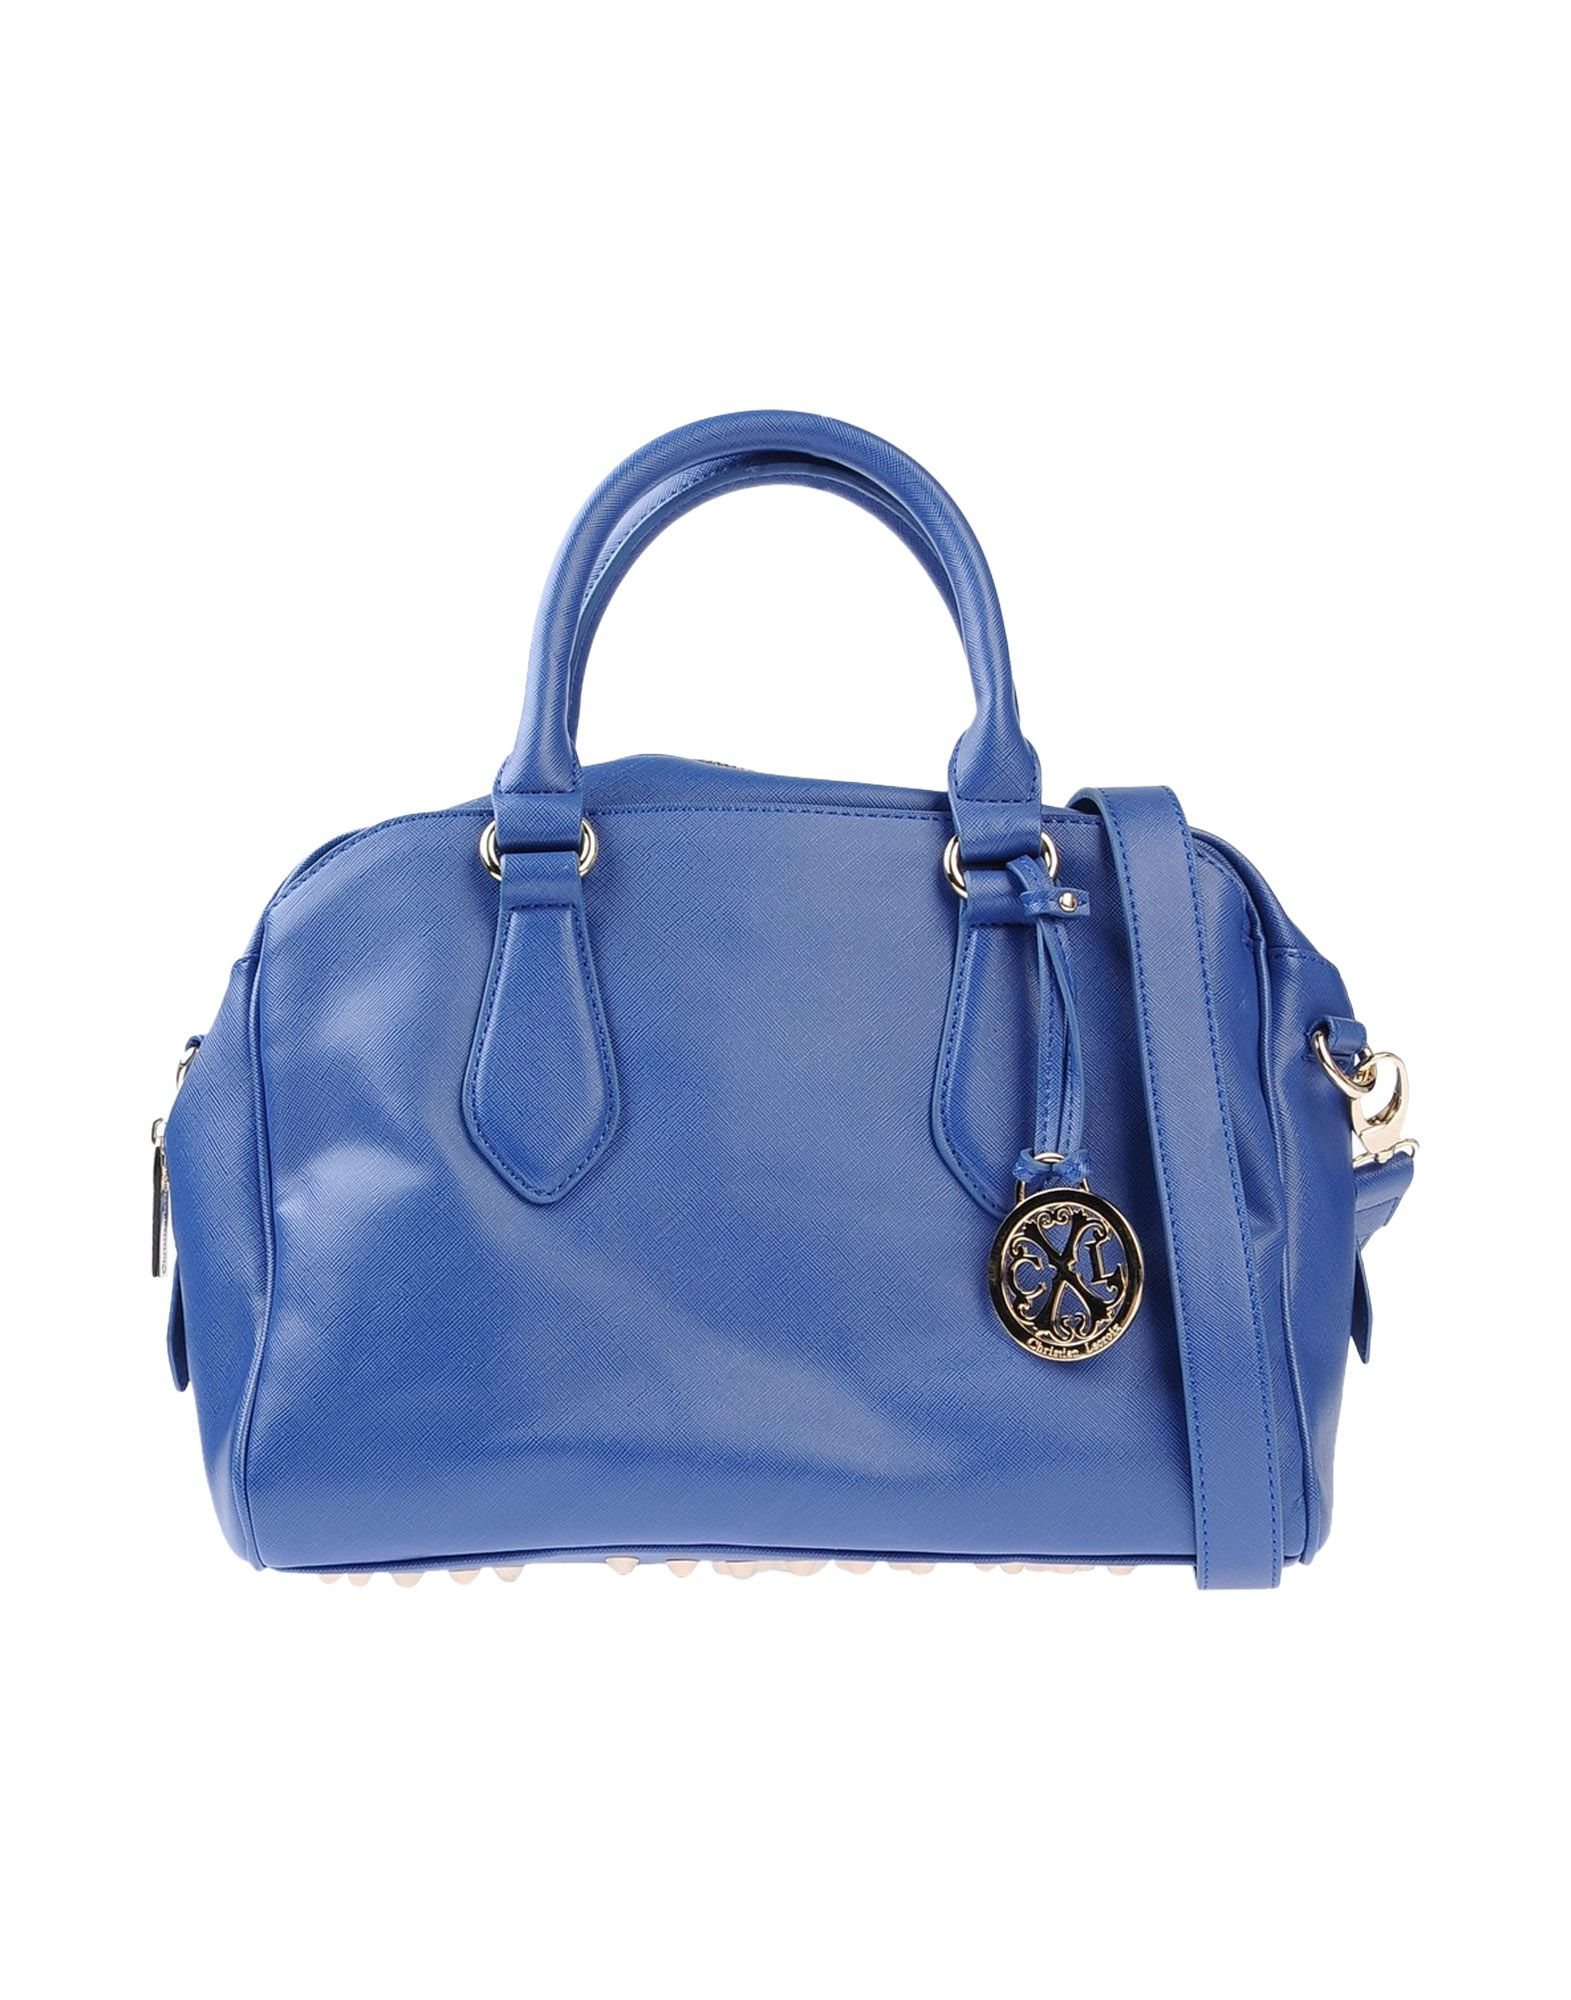 Christian Lacroix Handbag in Blue (Pastel blue) | Lyst